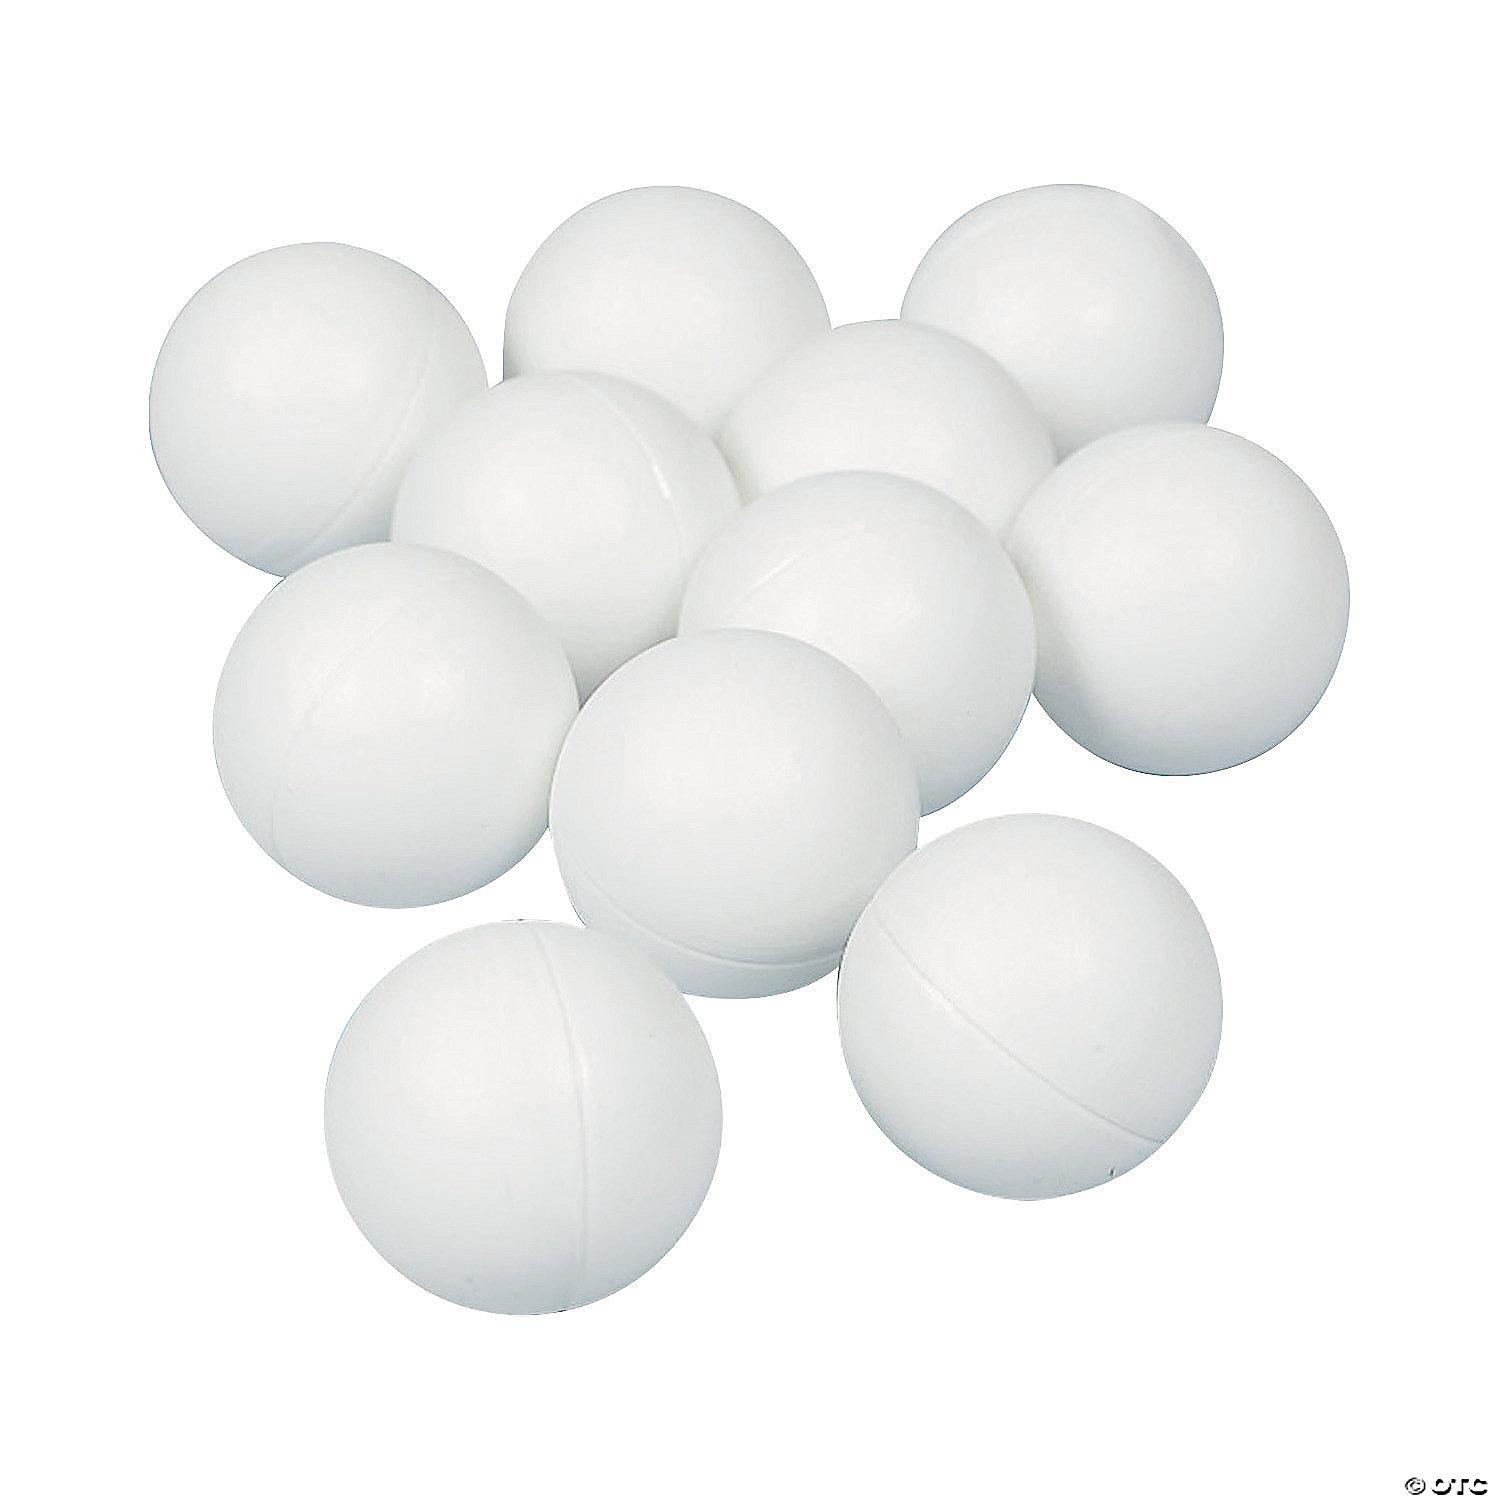 prettyia Durable 6 Count Ping Pong Table Tennis Balls Beer Pong Balls White 